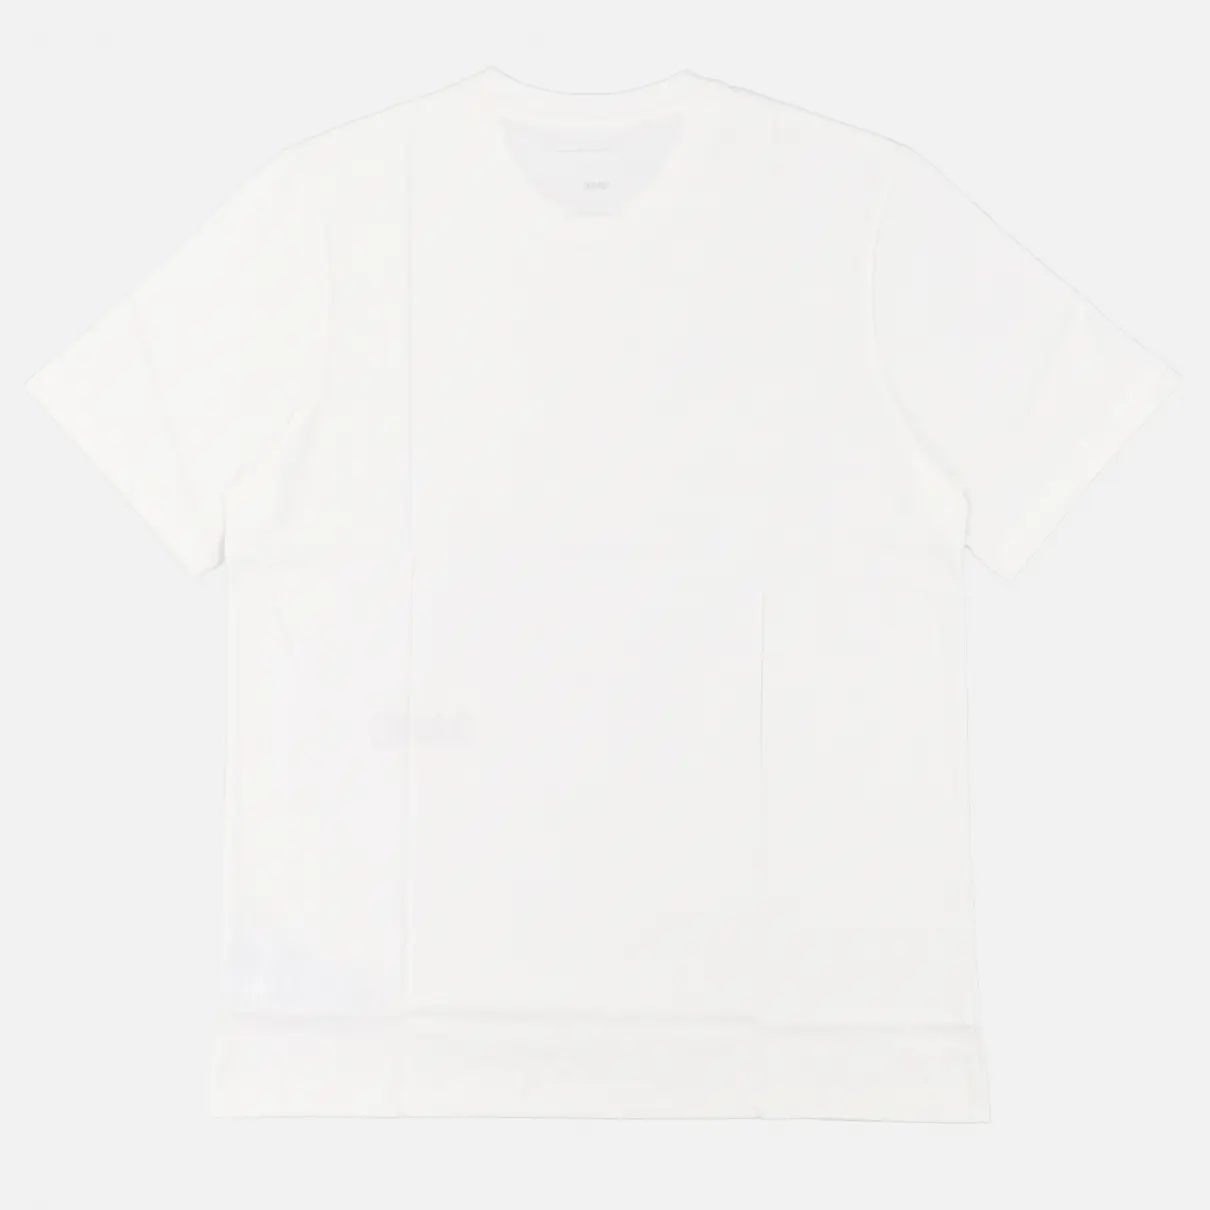 White Cotton T-shirt Oamc